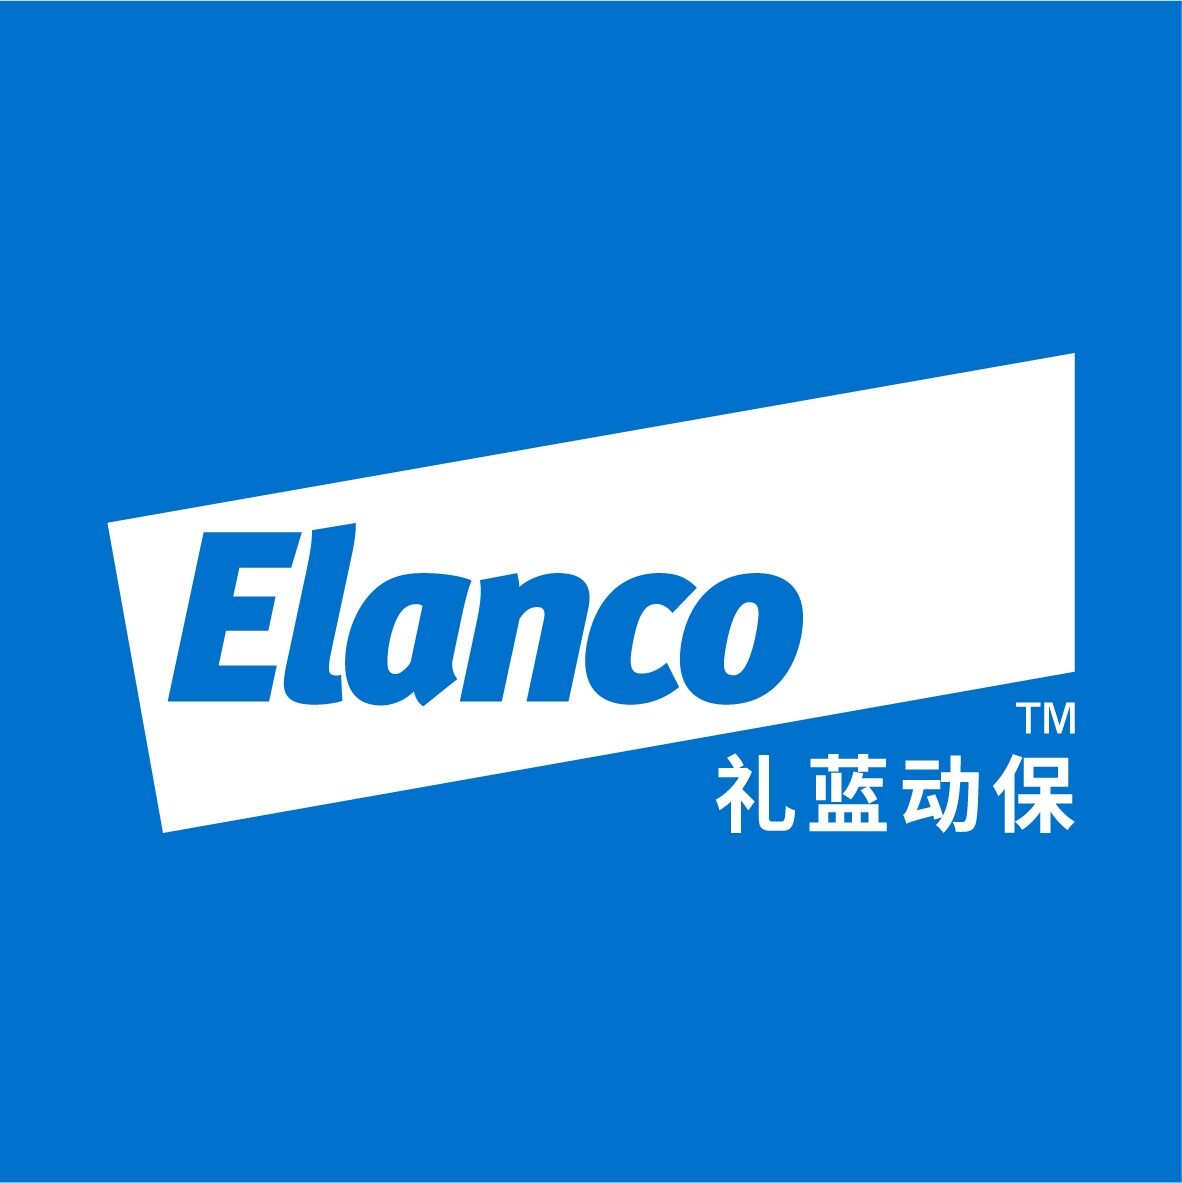 【Elanco全价值猪之 “泰勇——母健仔壮”利润】发现入围中国猪业抗疫增效技术创新大赛·第二季候选项目